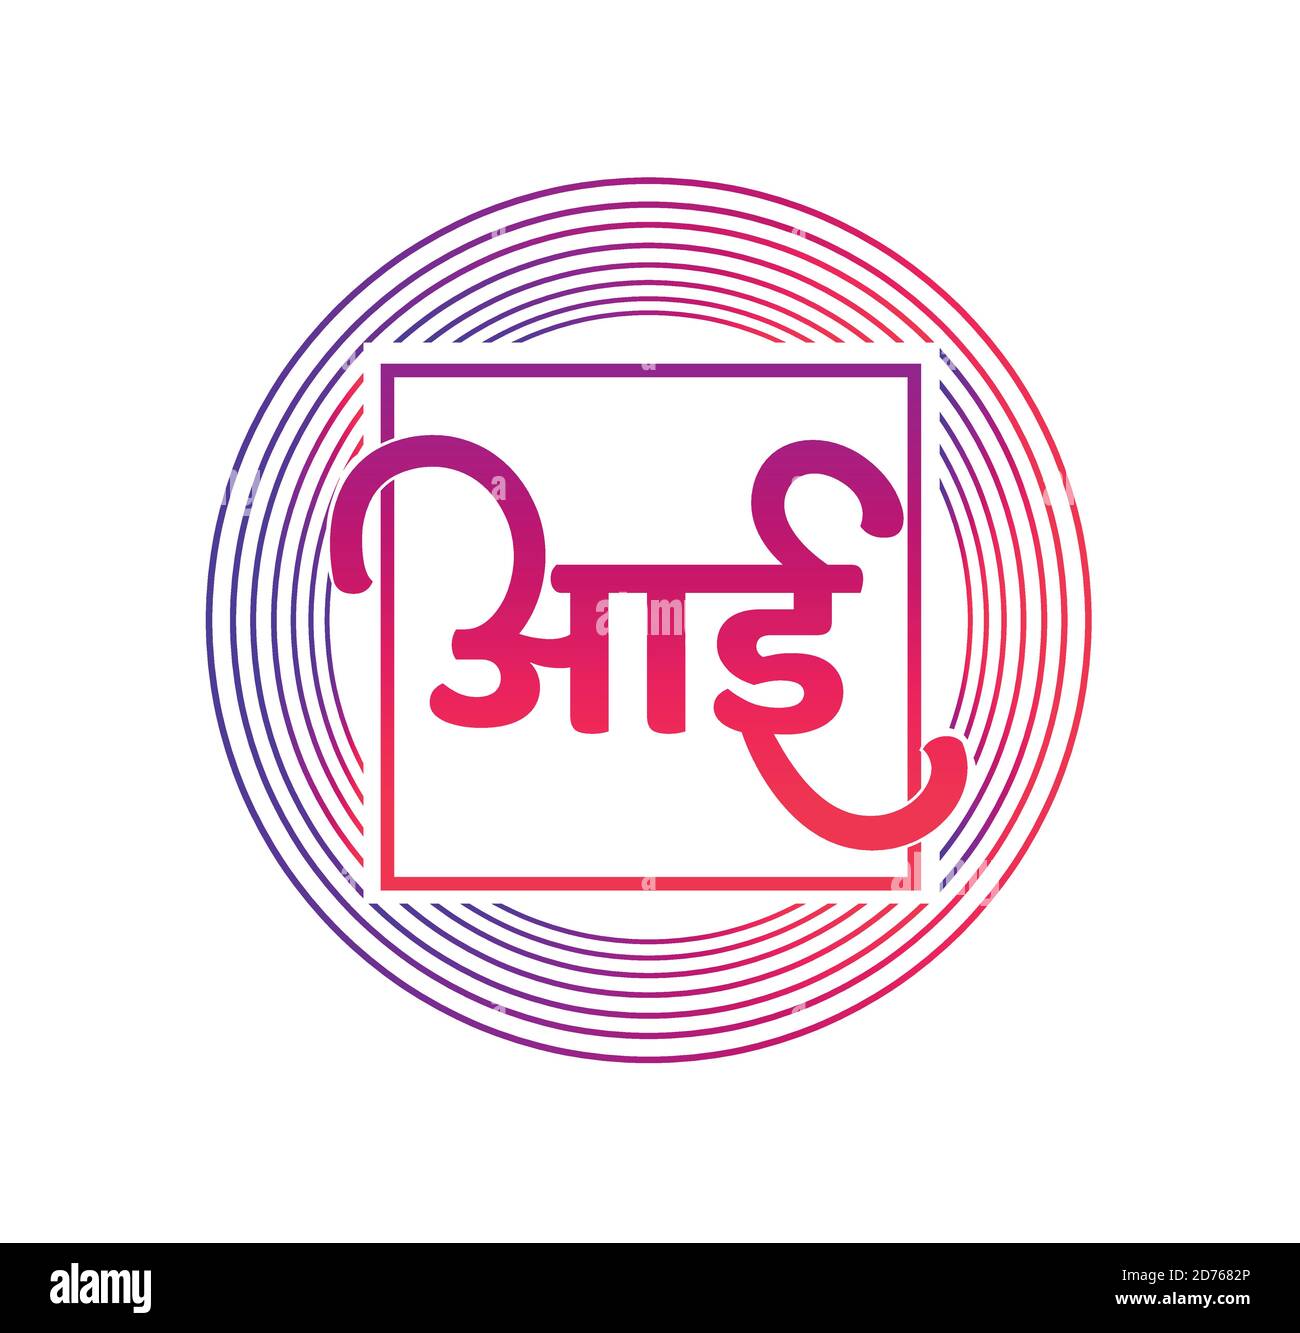 Jay Bhim Text Png In Marathi Download - Calligraphy, Transparent Png , Transparent  Png Image - PNGitem